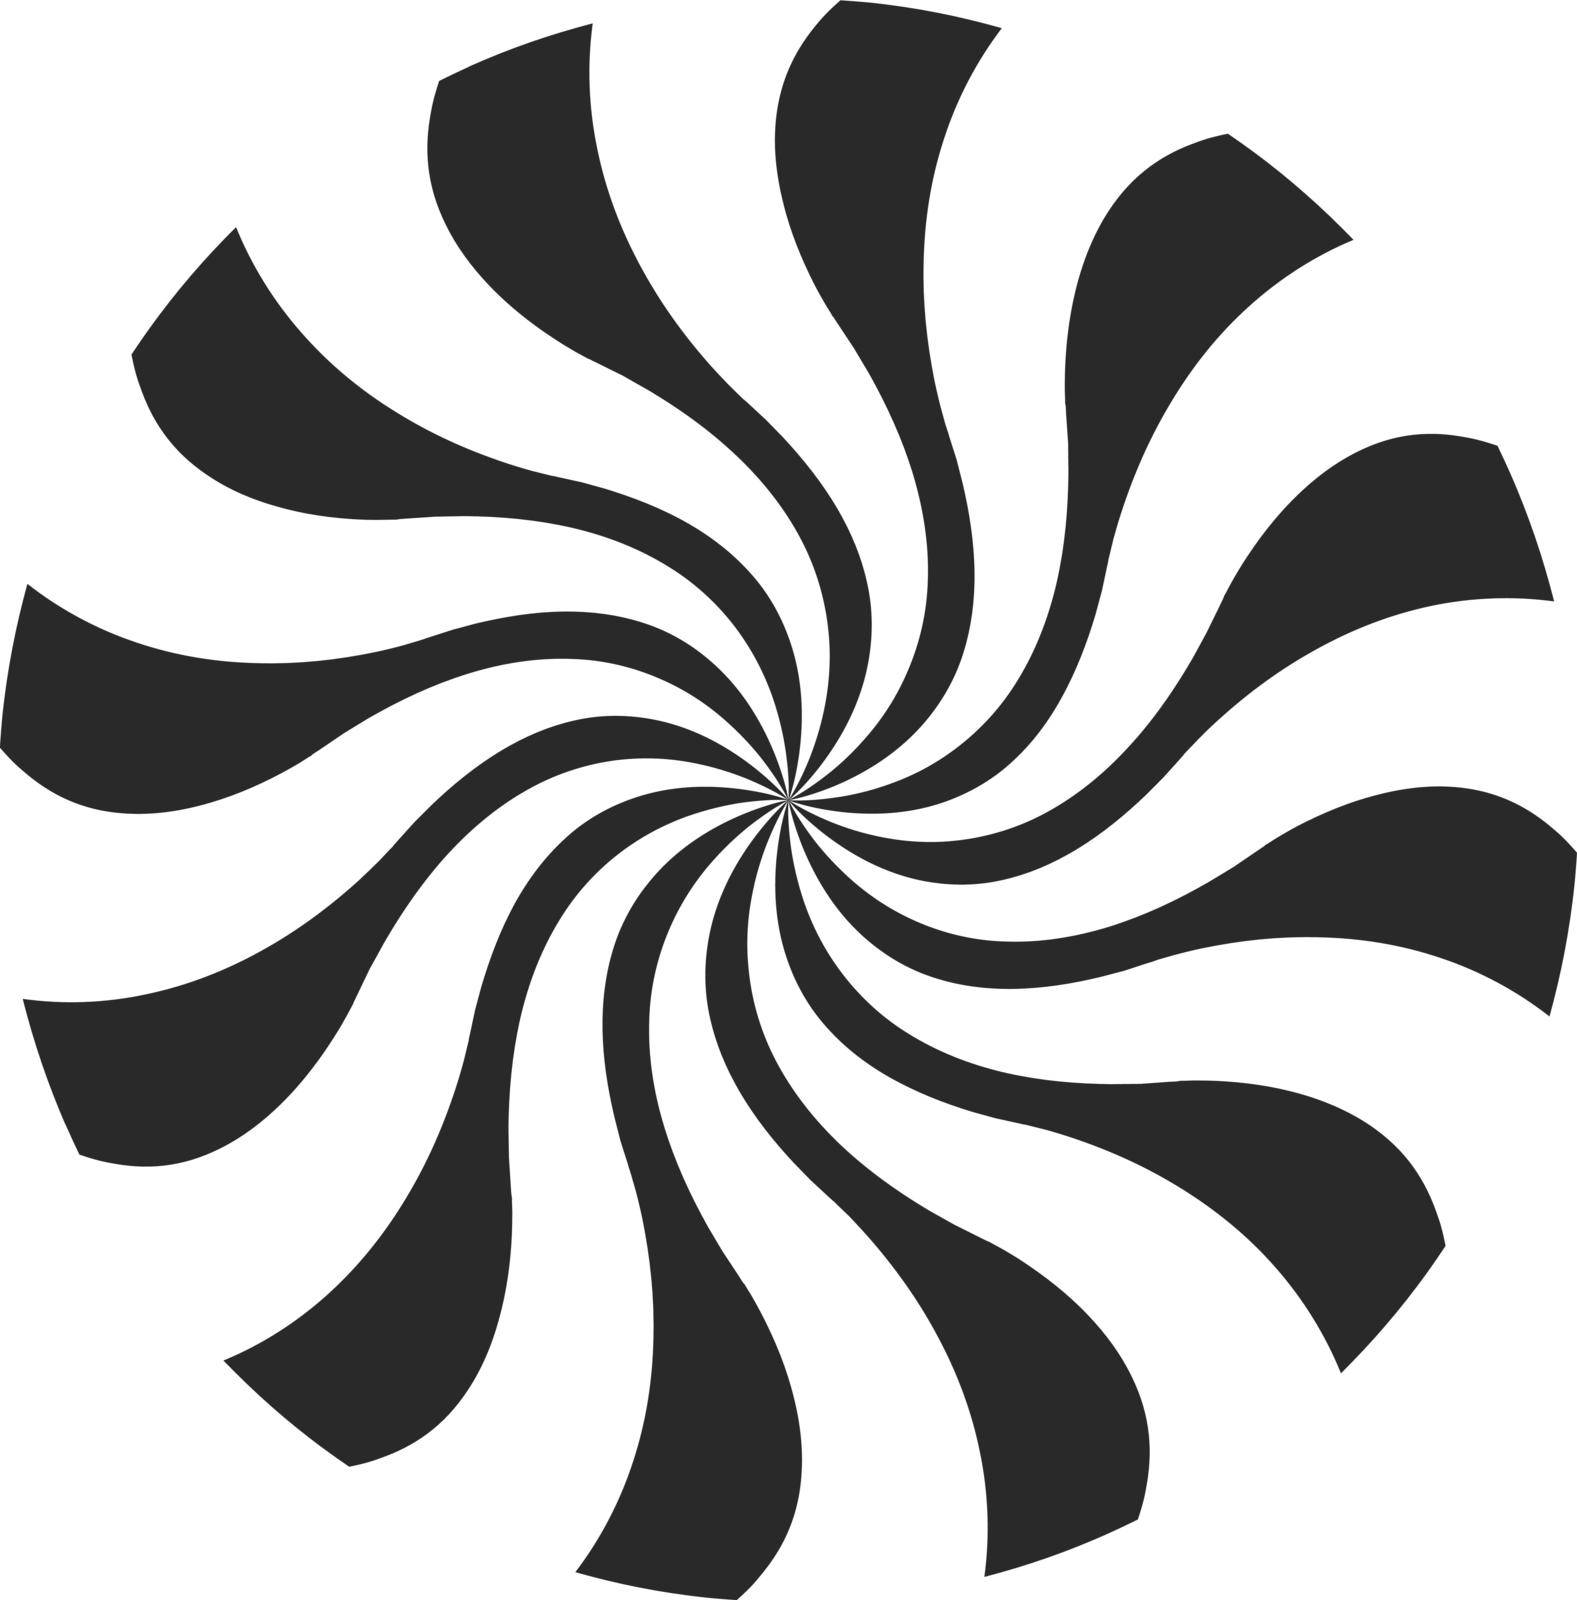 Black round swirl. Twisting motion circle logo by MicroOne